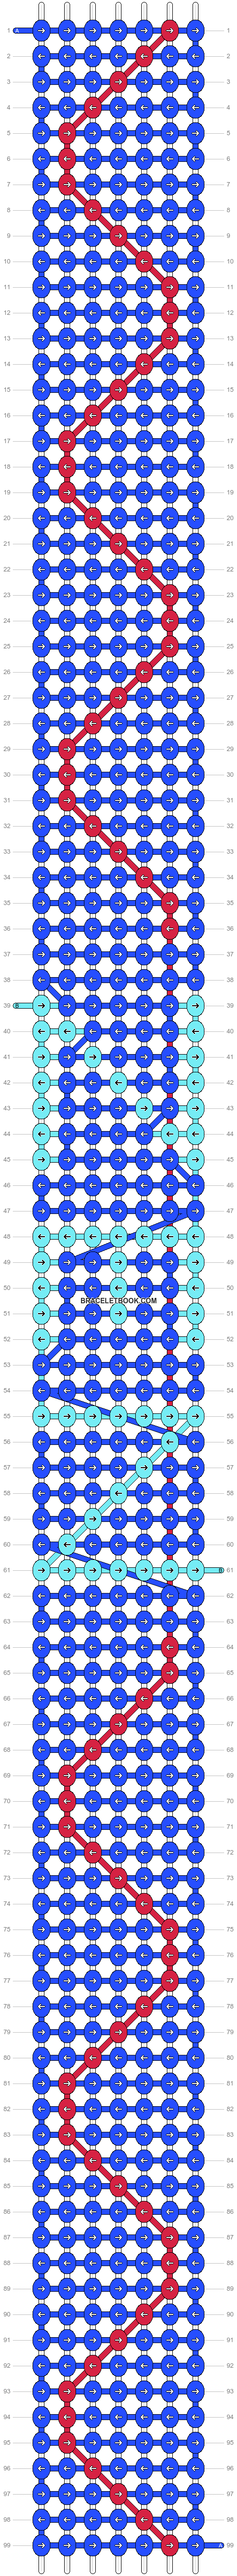 Alpha pattern #18280 variation #145808 pattern